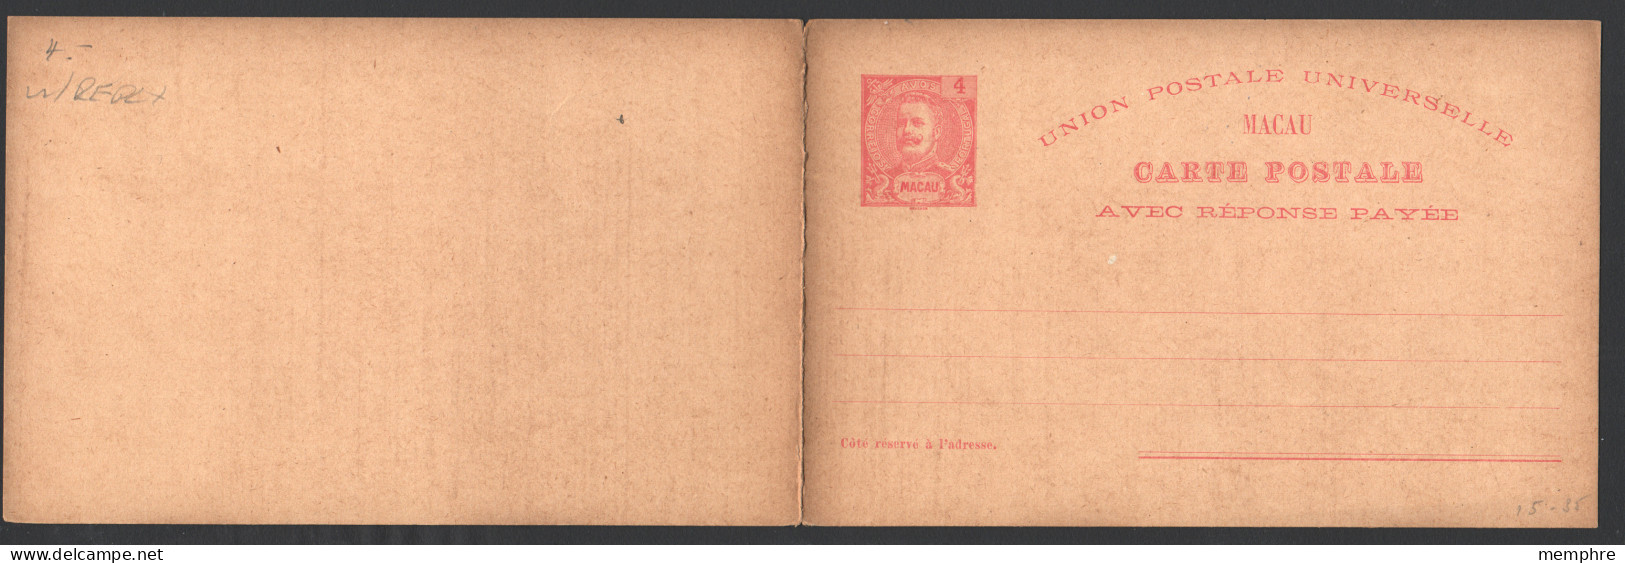 1903  Carte Postale Avec Réponse Payée Carlos 4 Avos  Neuve - Cartas & Documentos